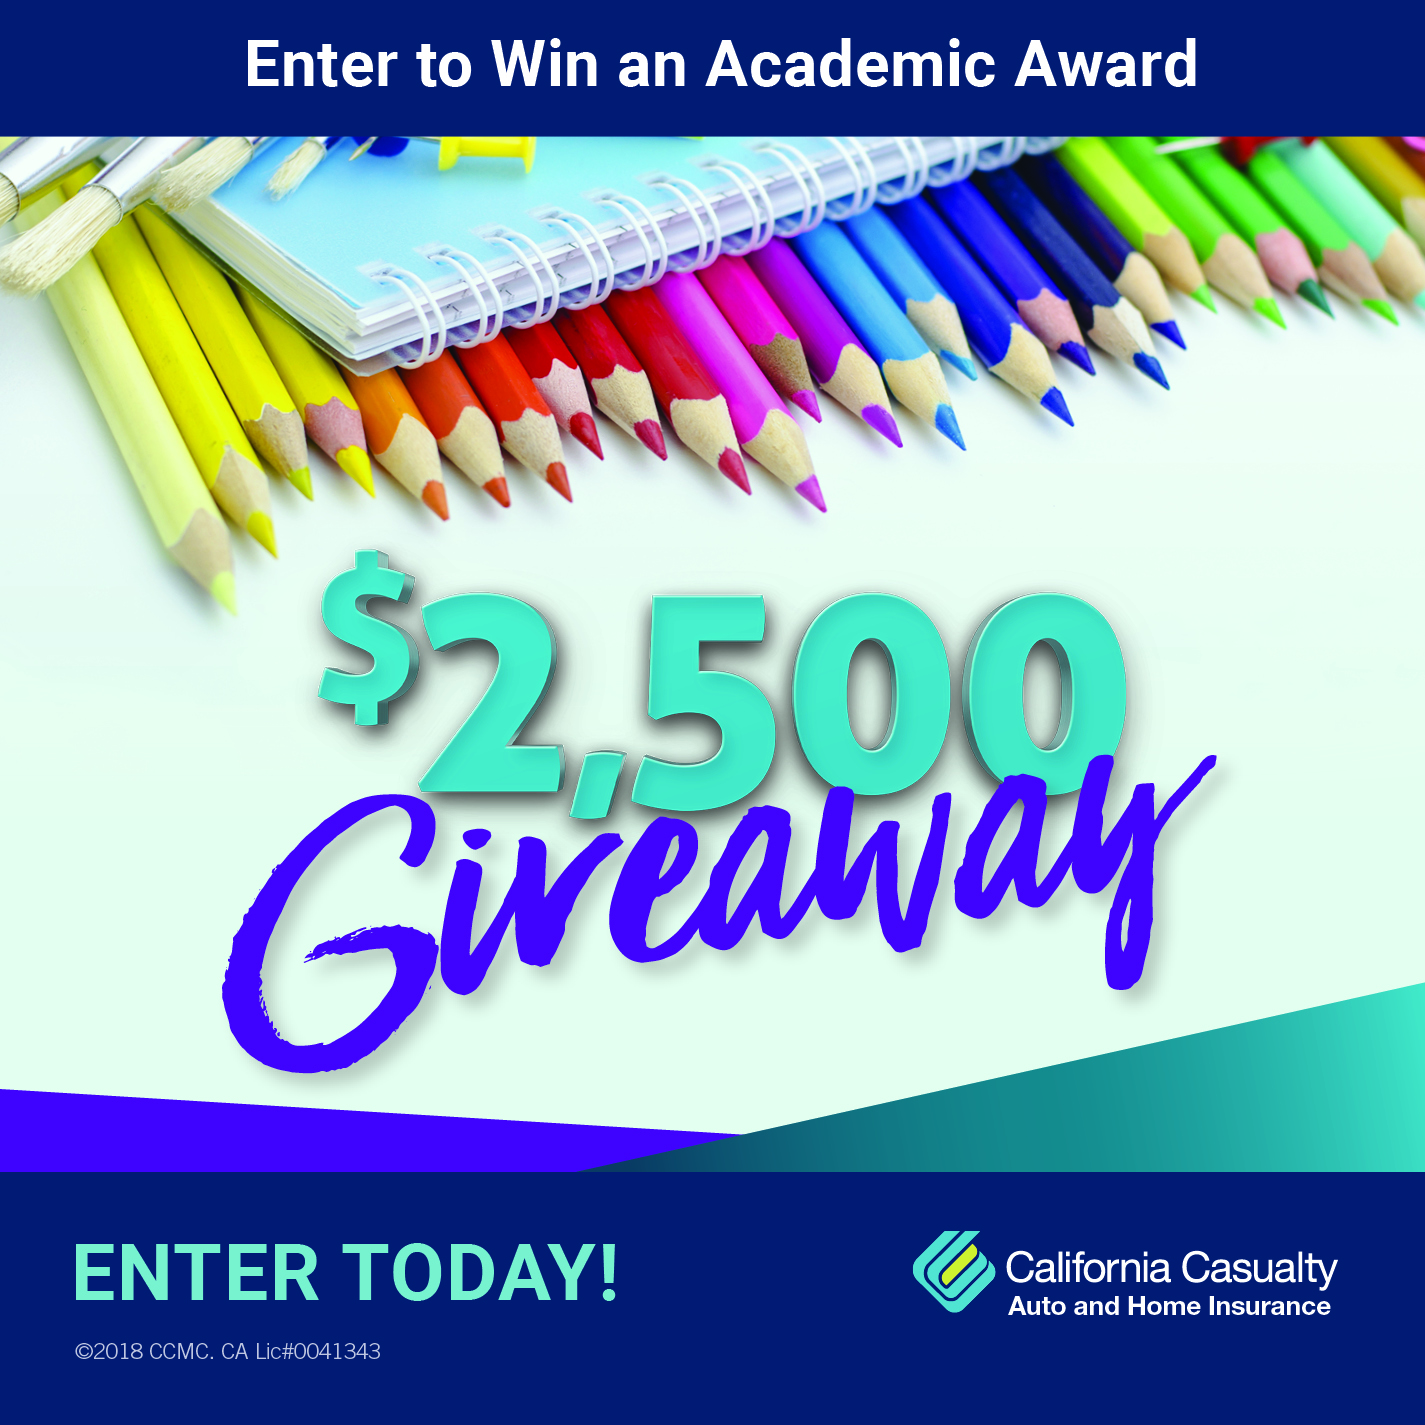 California Casualty's $2,500 Academic Award